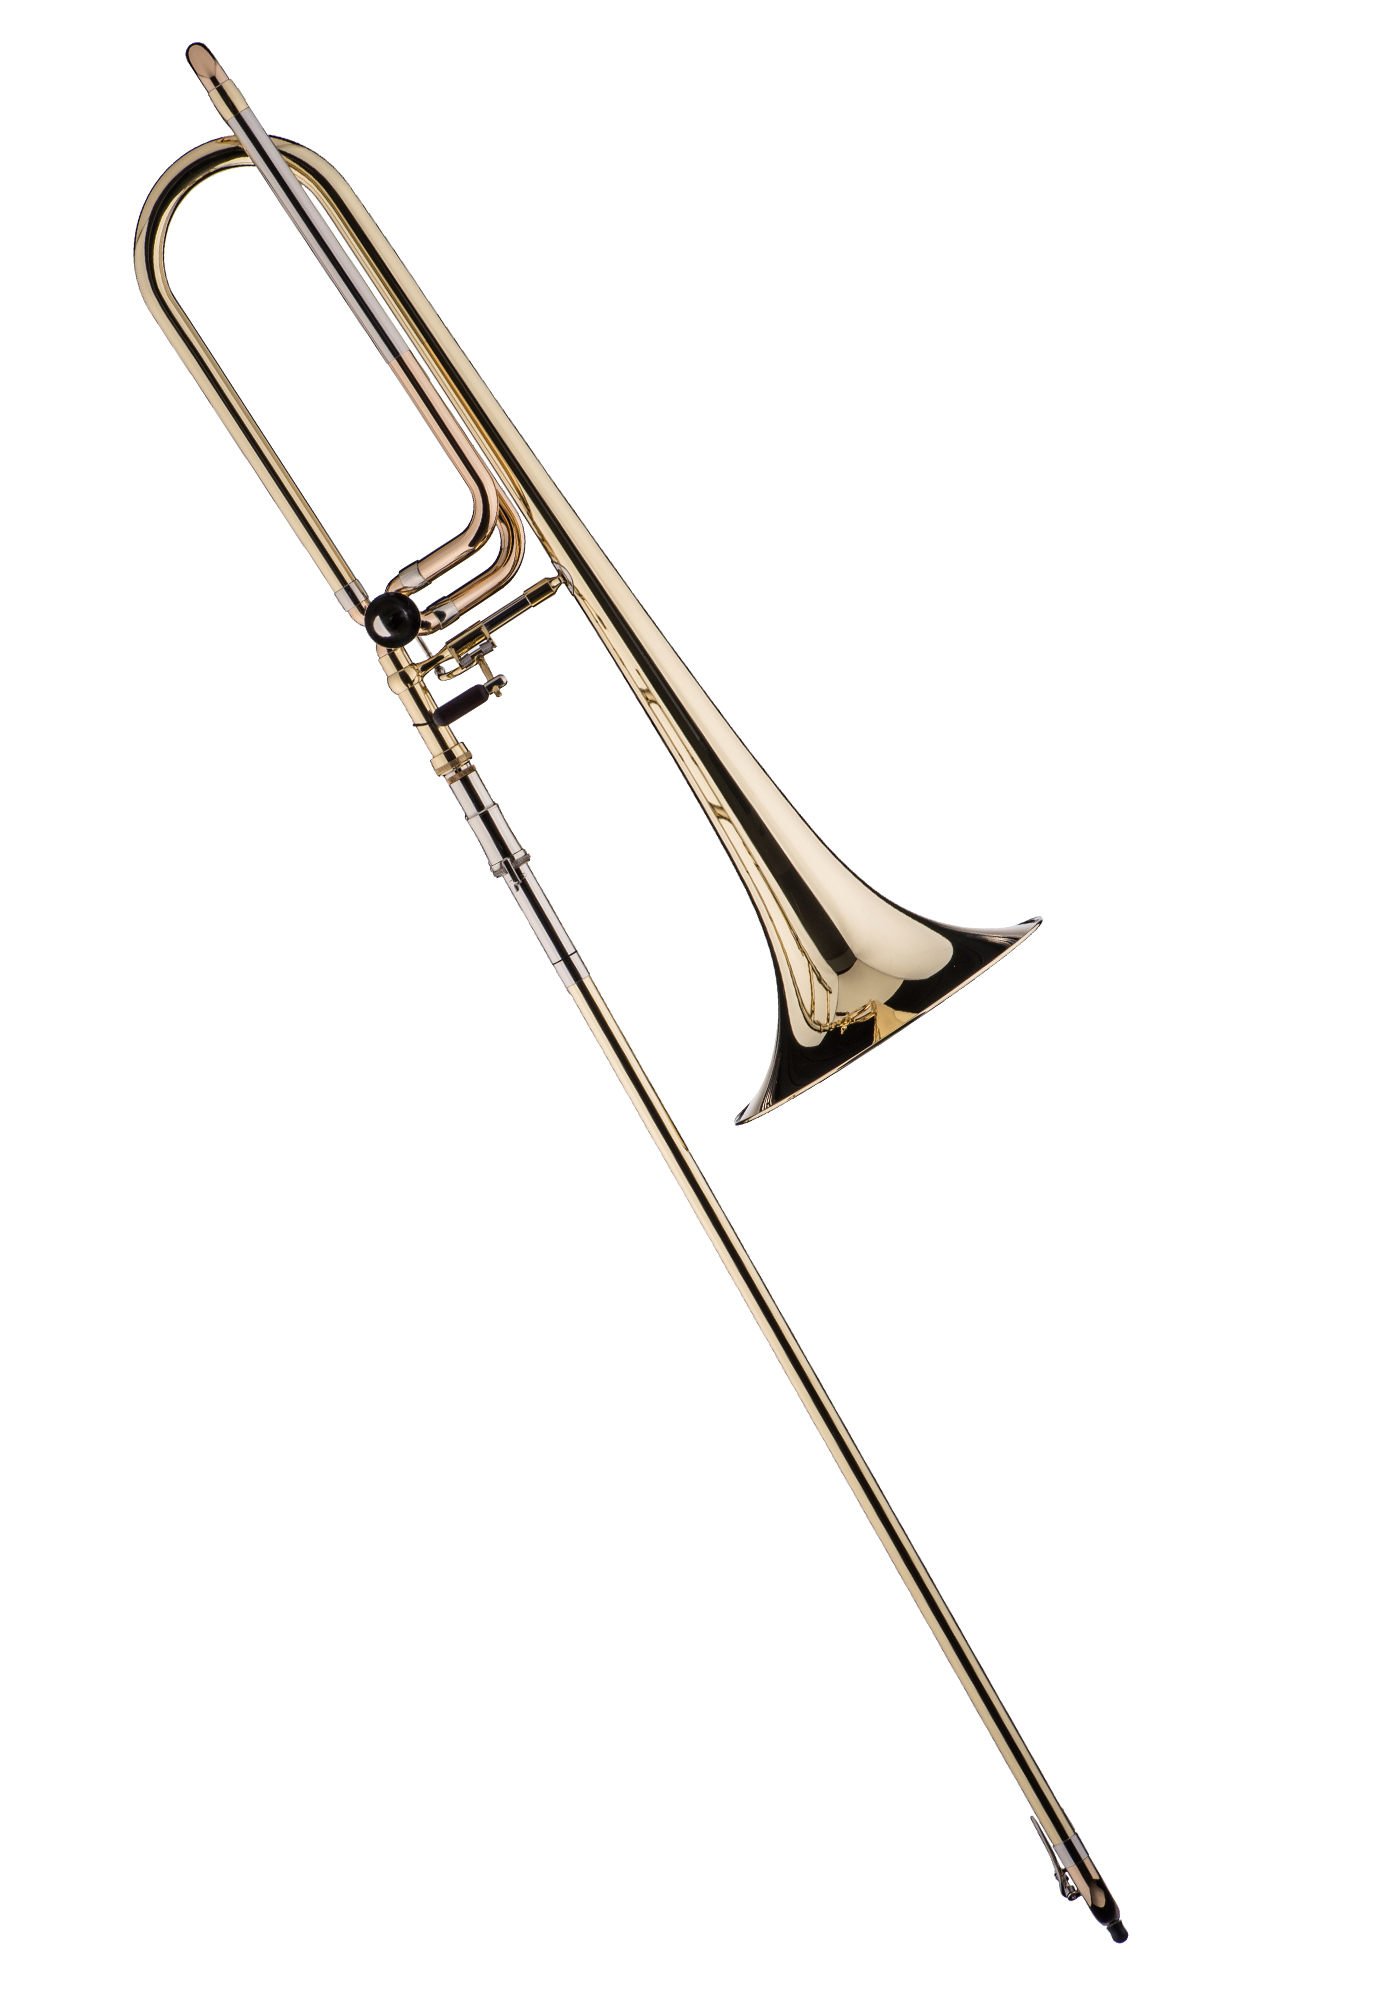 Schagerl Bb/F Trombone "AURORA" lacquered